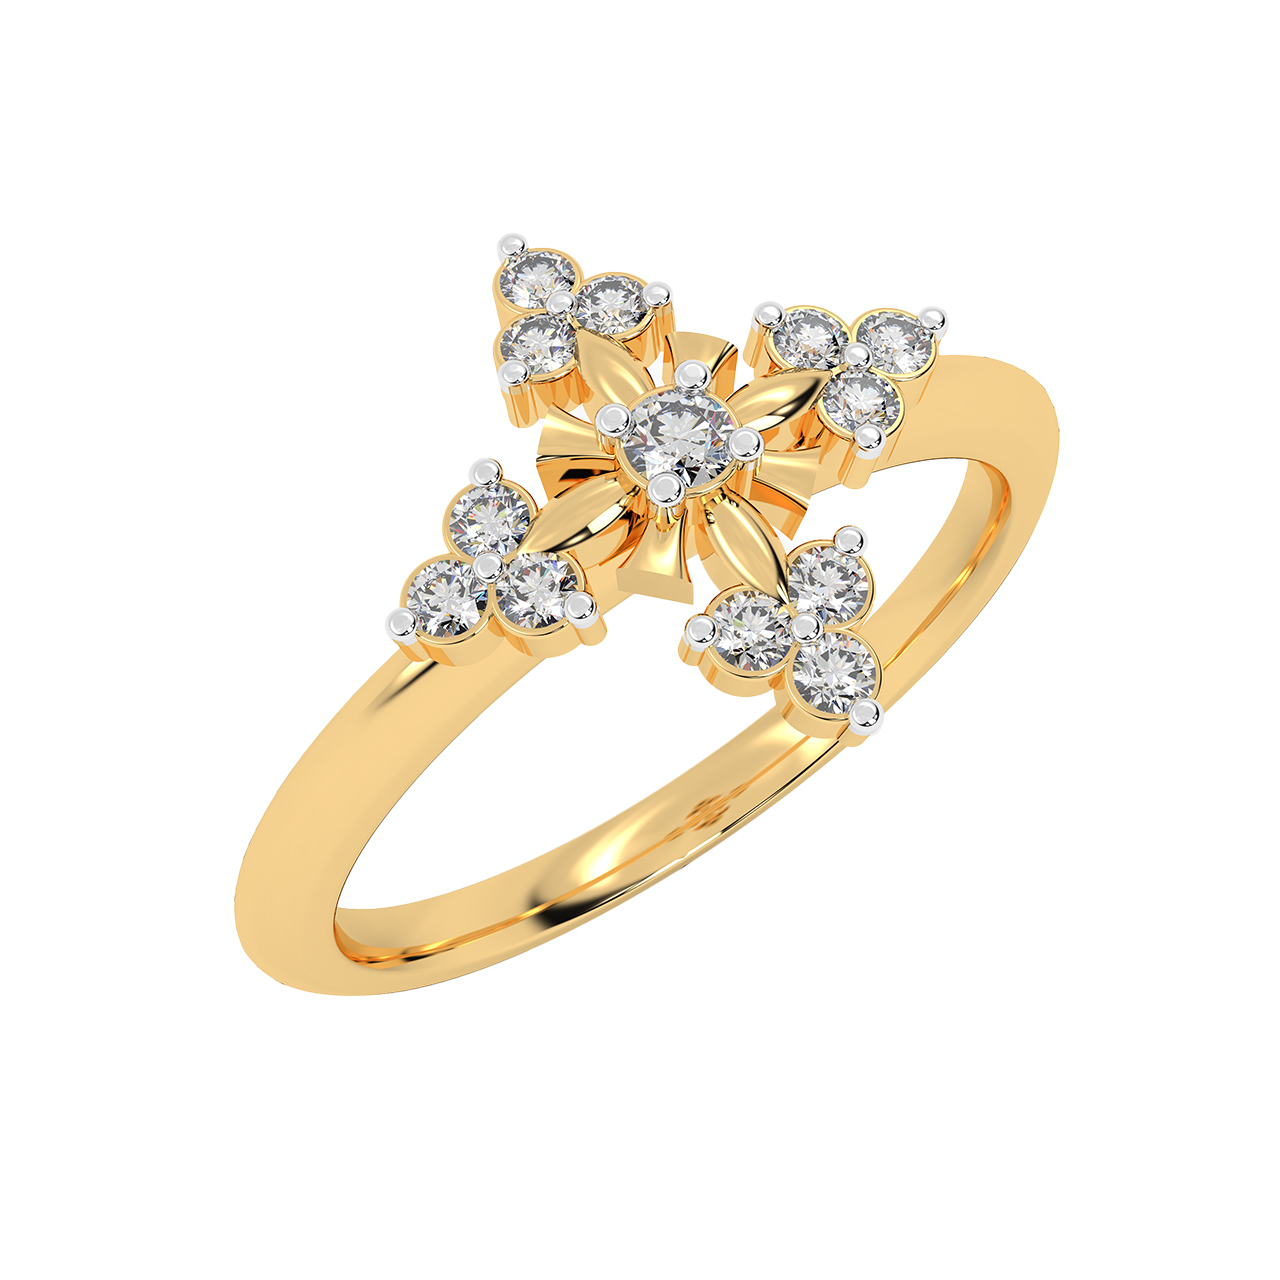 Enhanced Design Diamond Ring